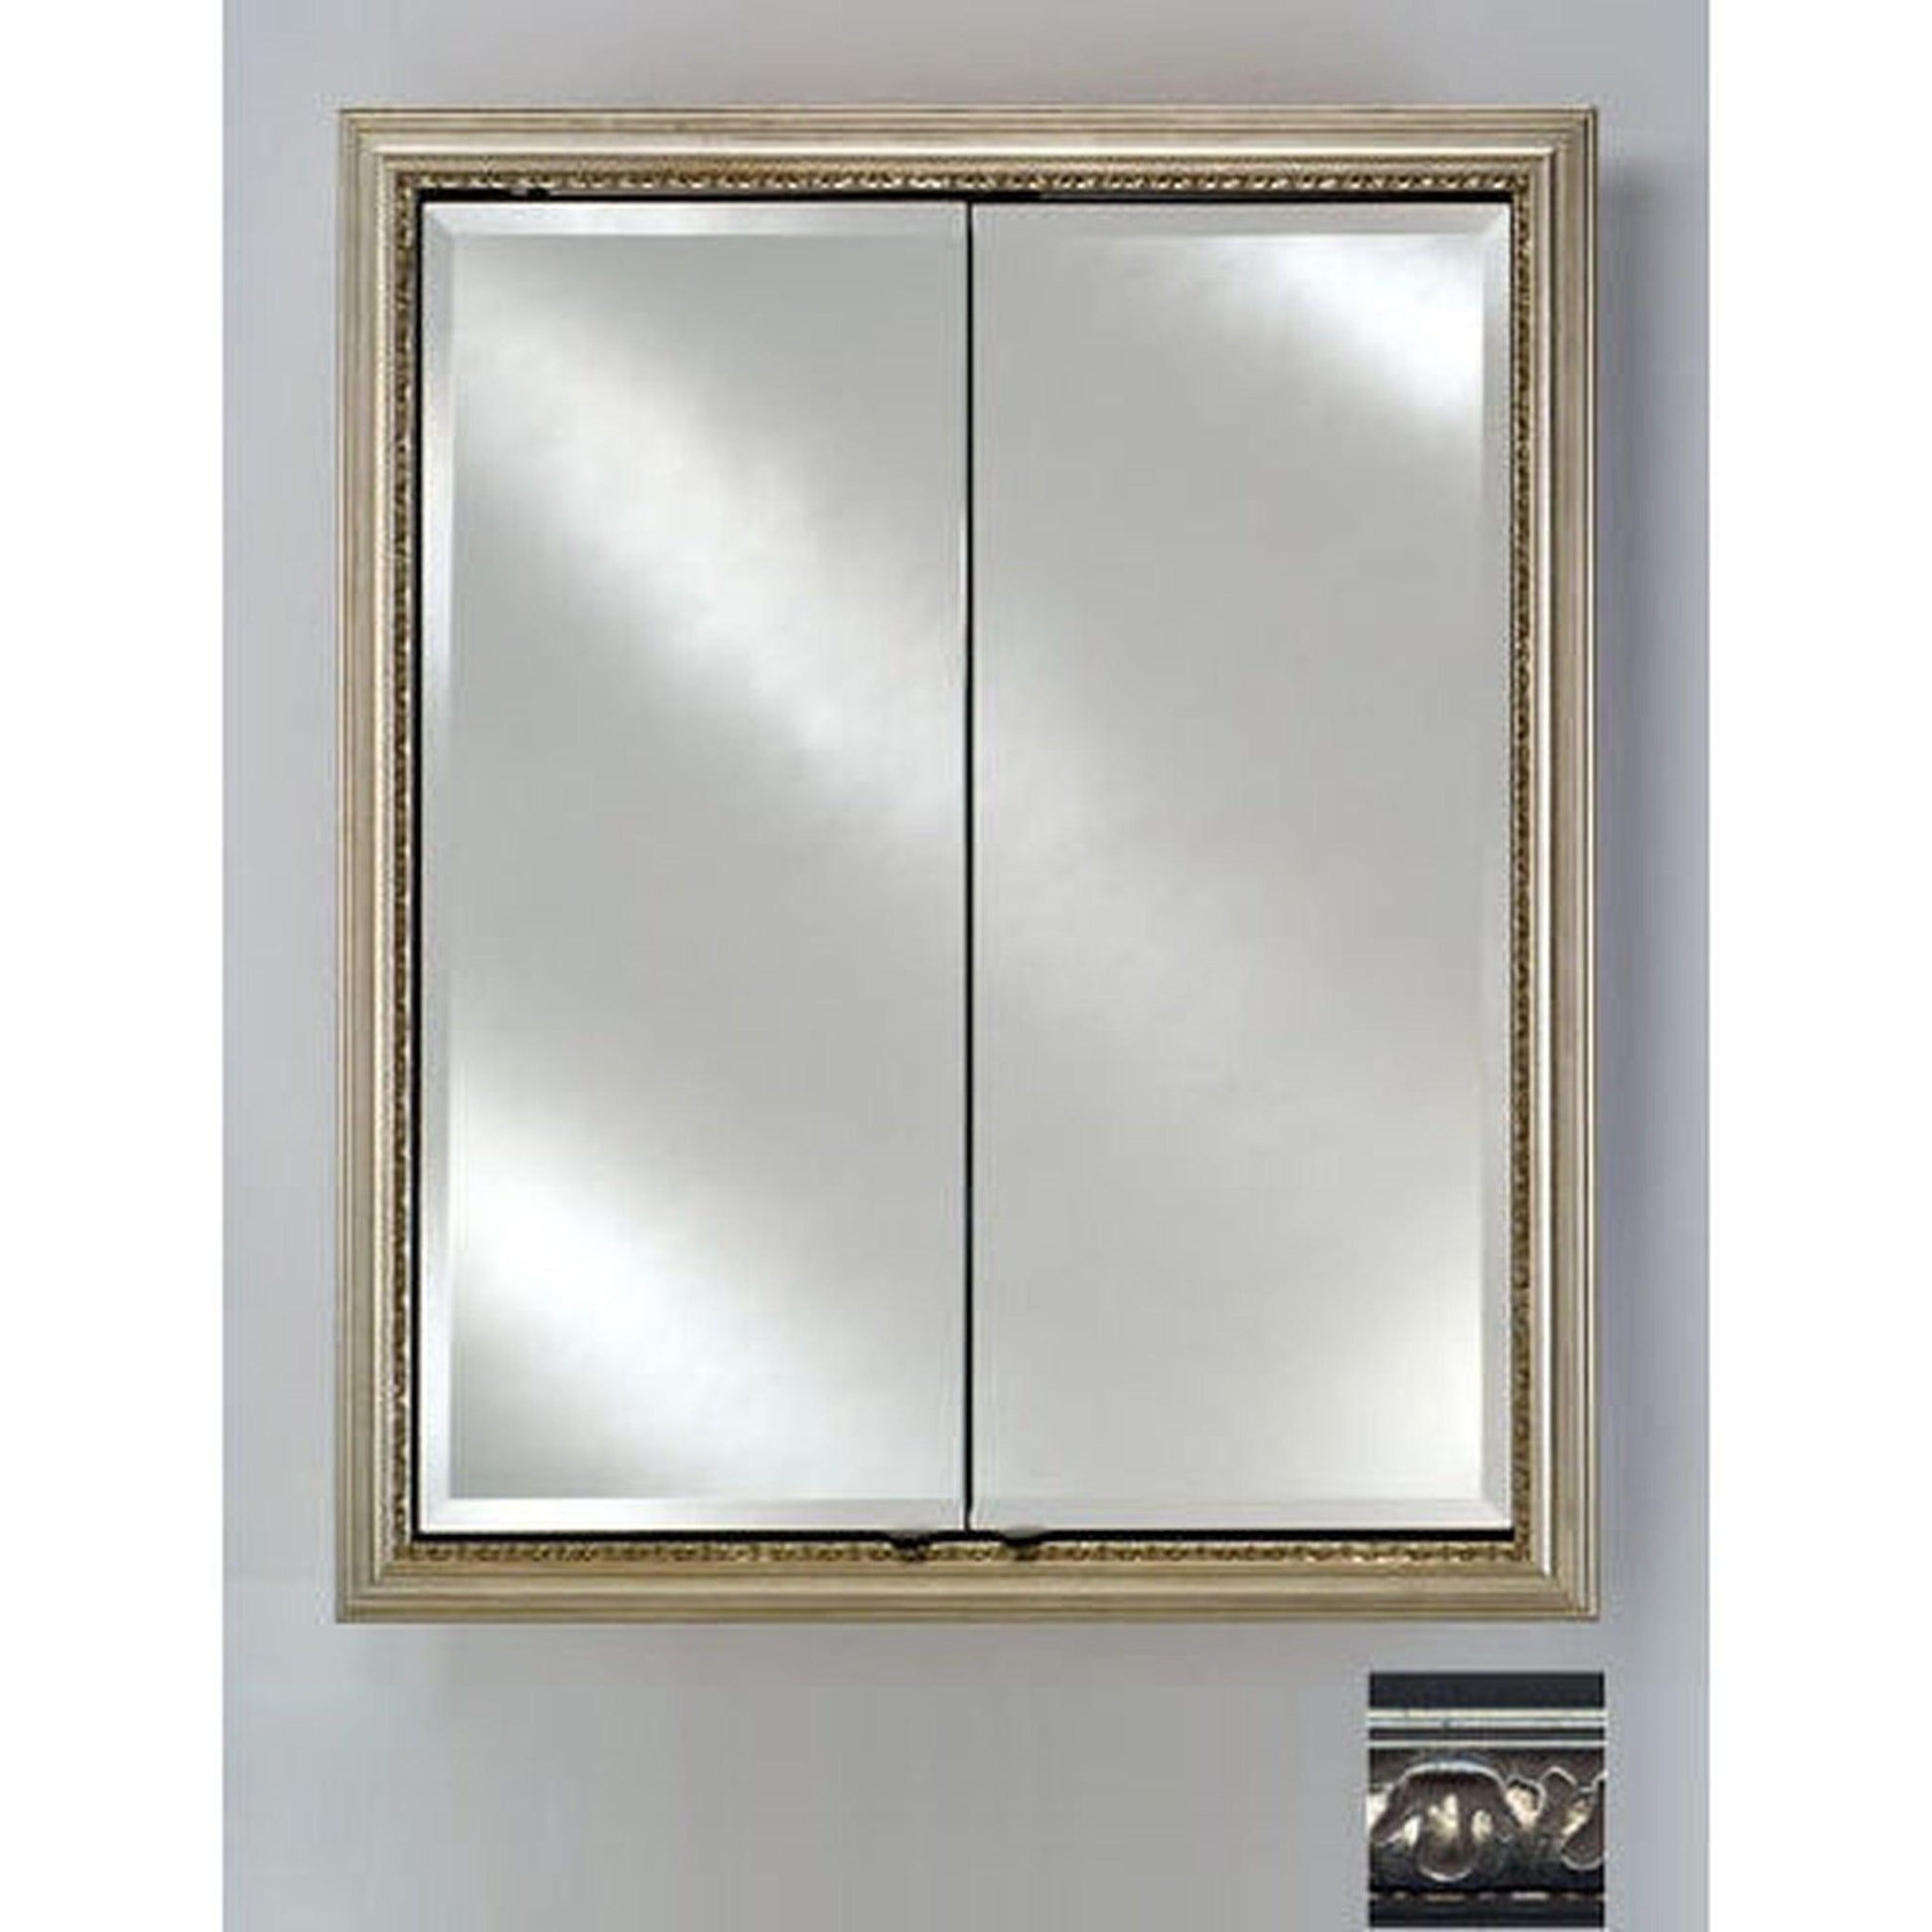 Afina Signature 24" x 30" Valencia Antique Silver Recessed Double Door Medicine Cabinet With Beveled Edge Mirror